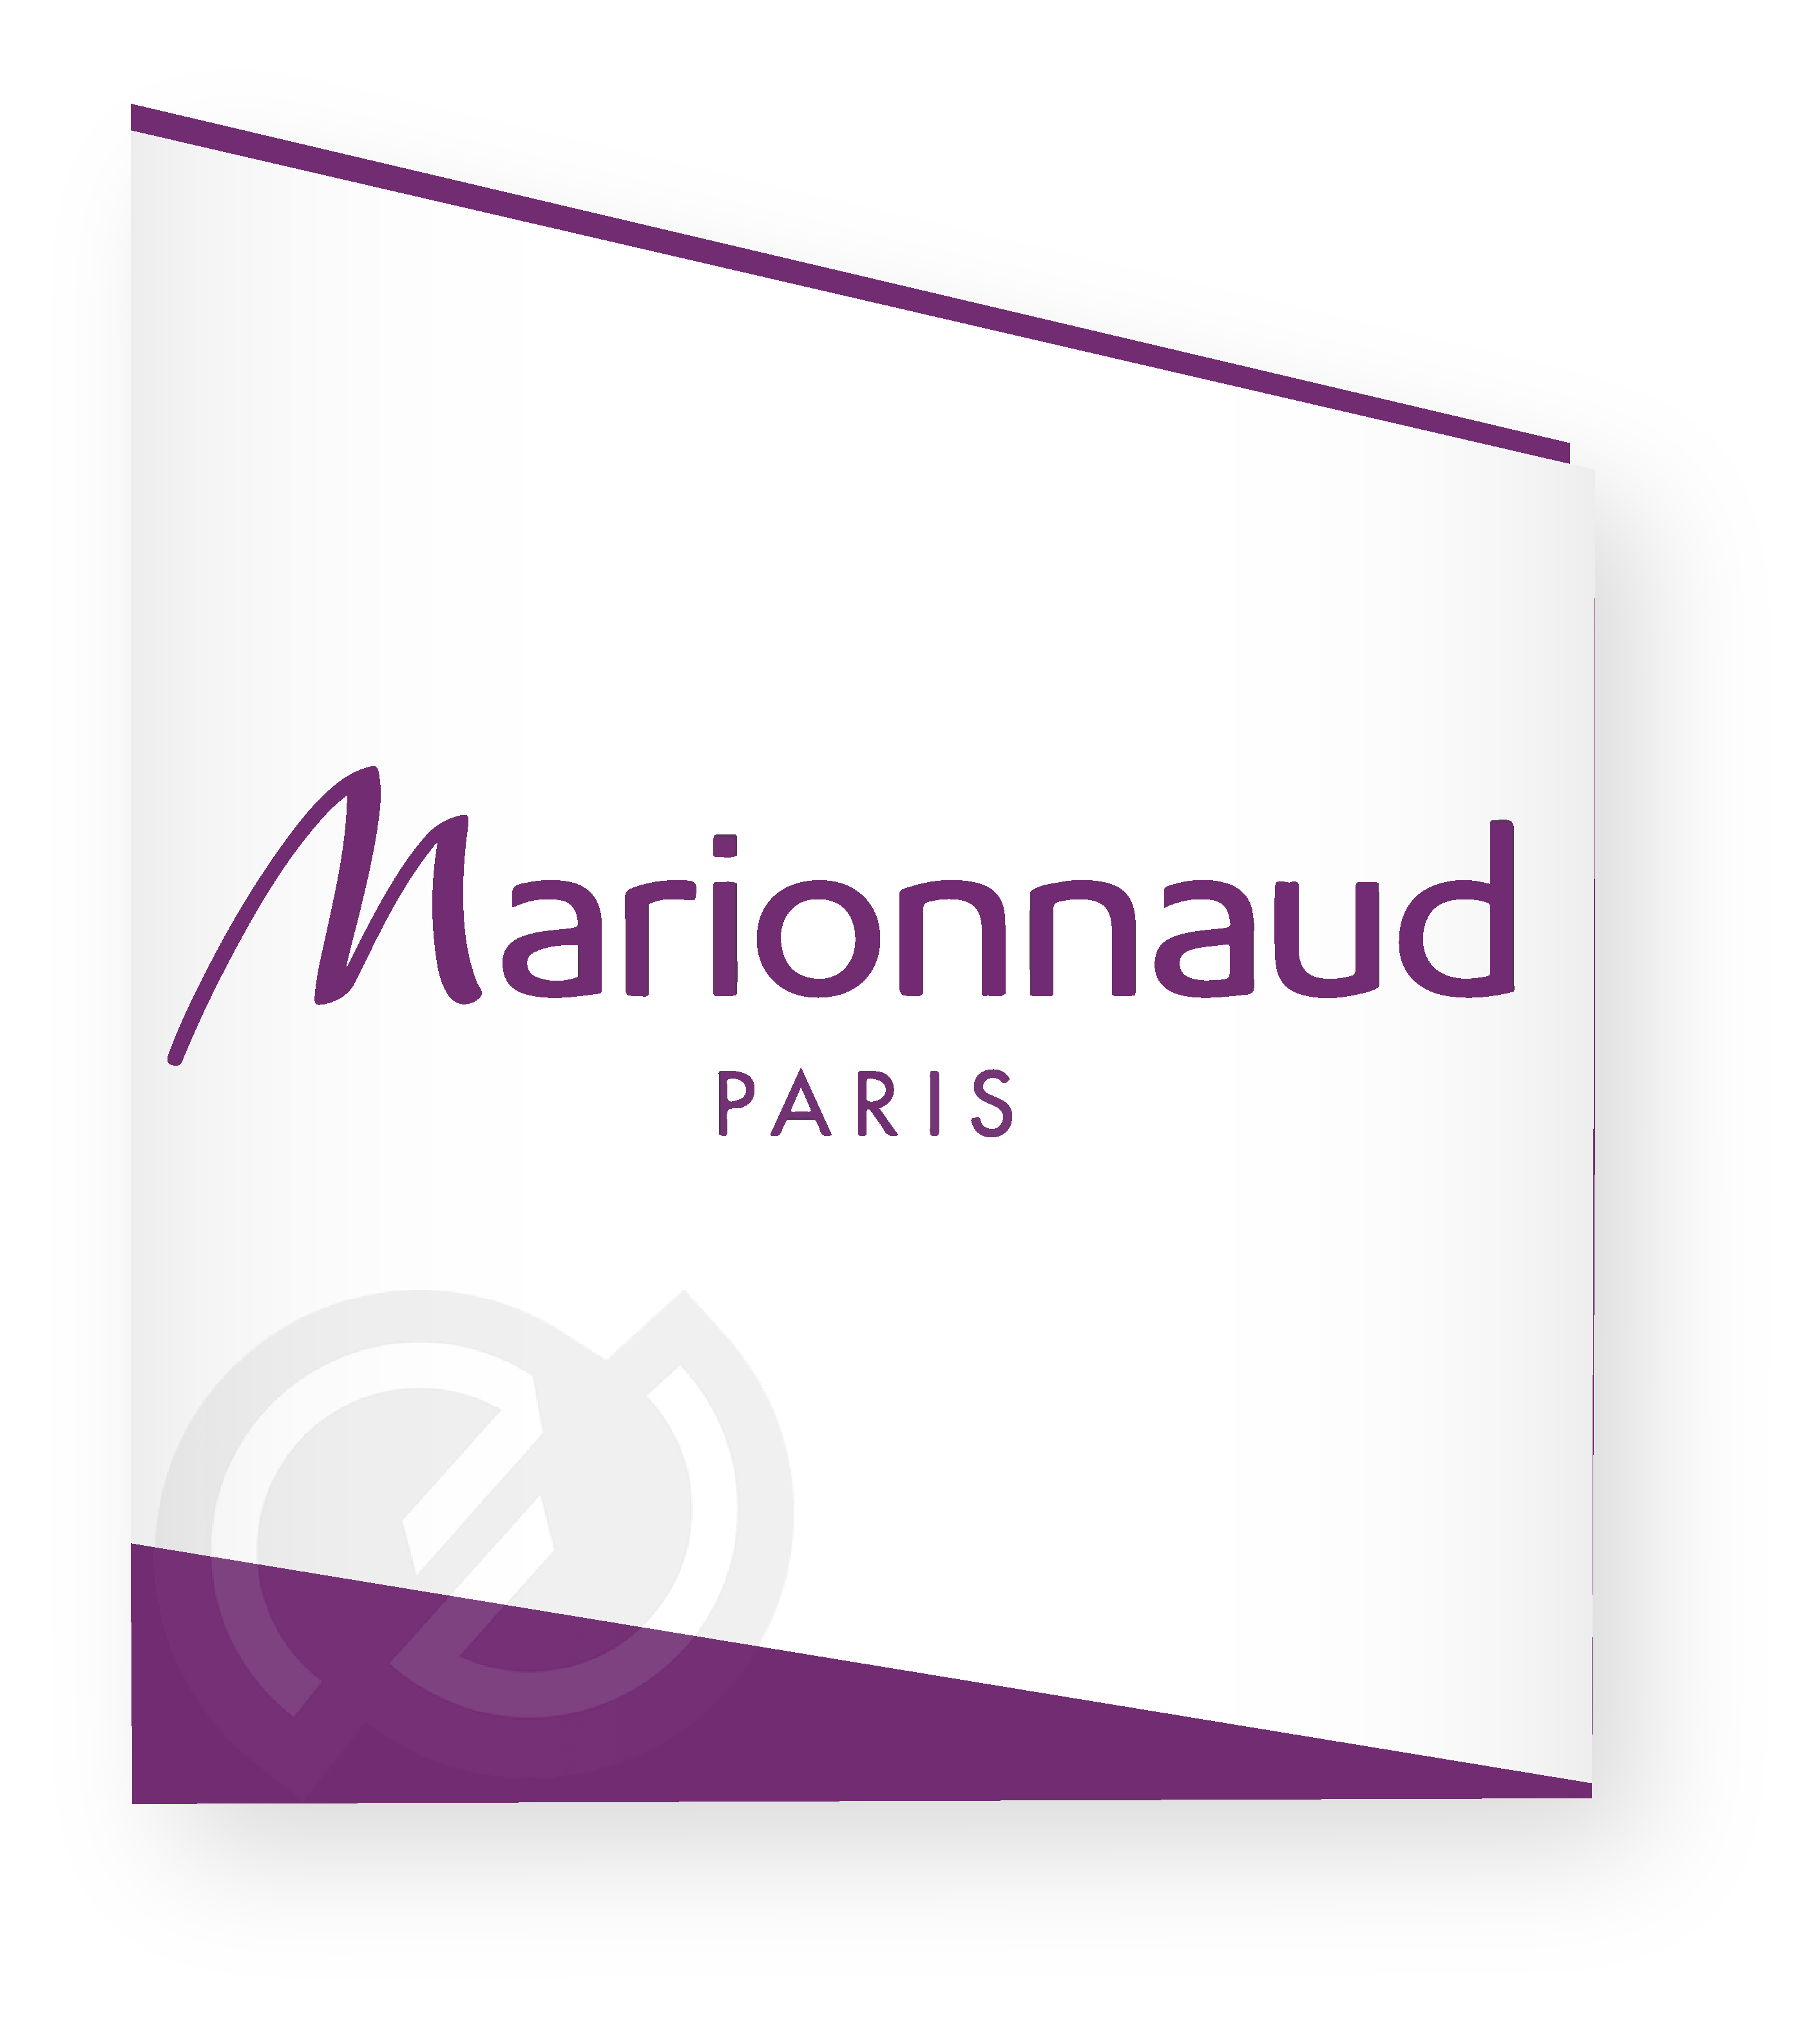 Image logo Marionnaud